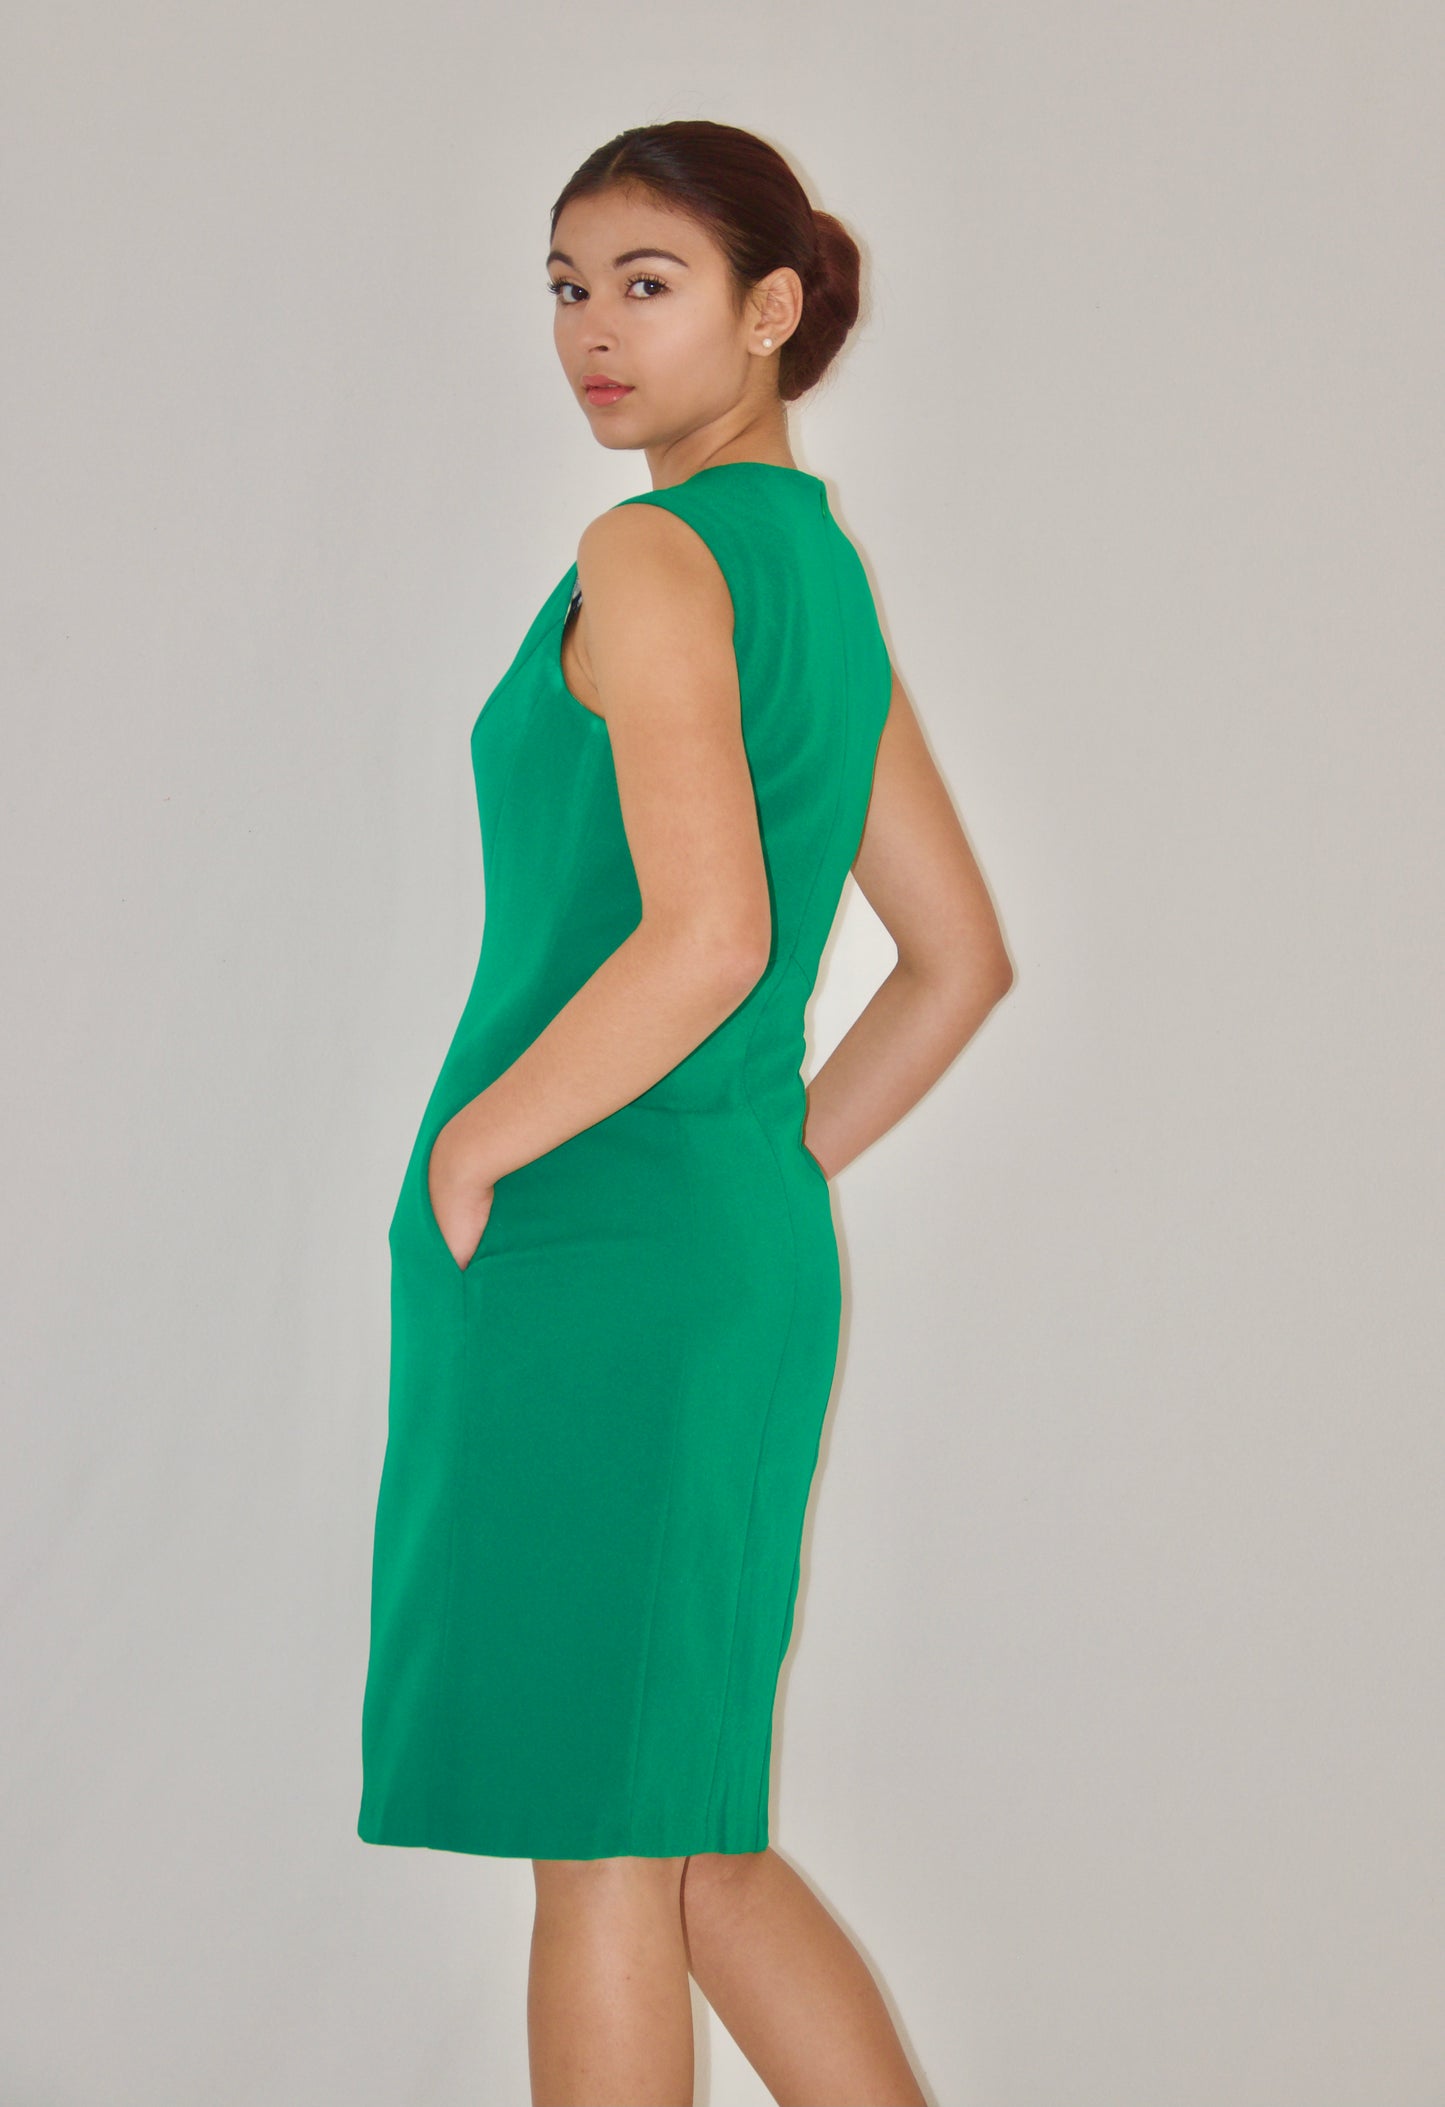 Green Sleeveless Sheath Dress